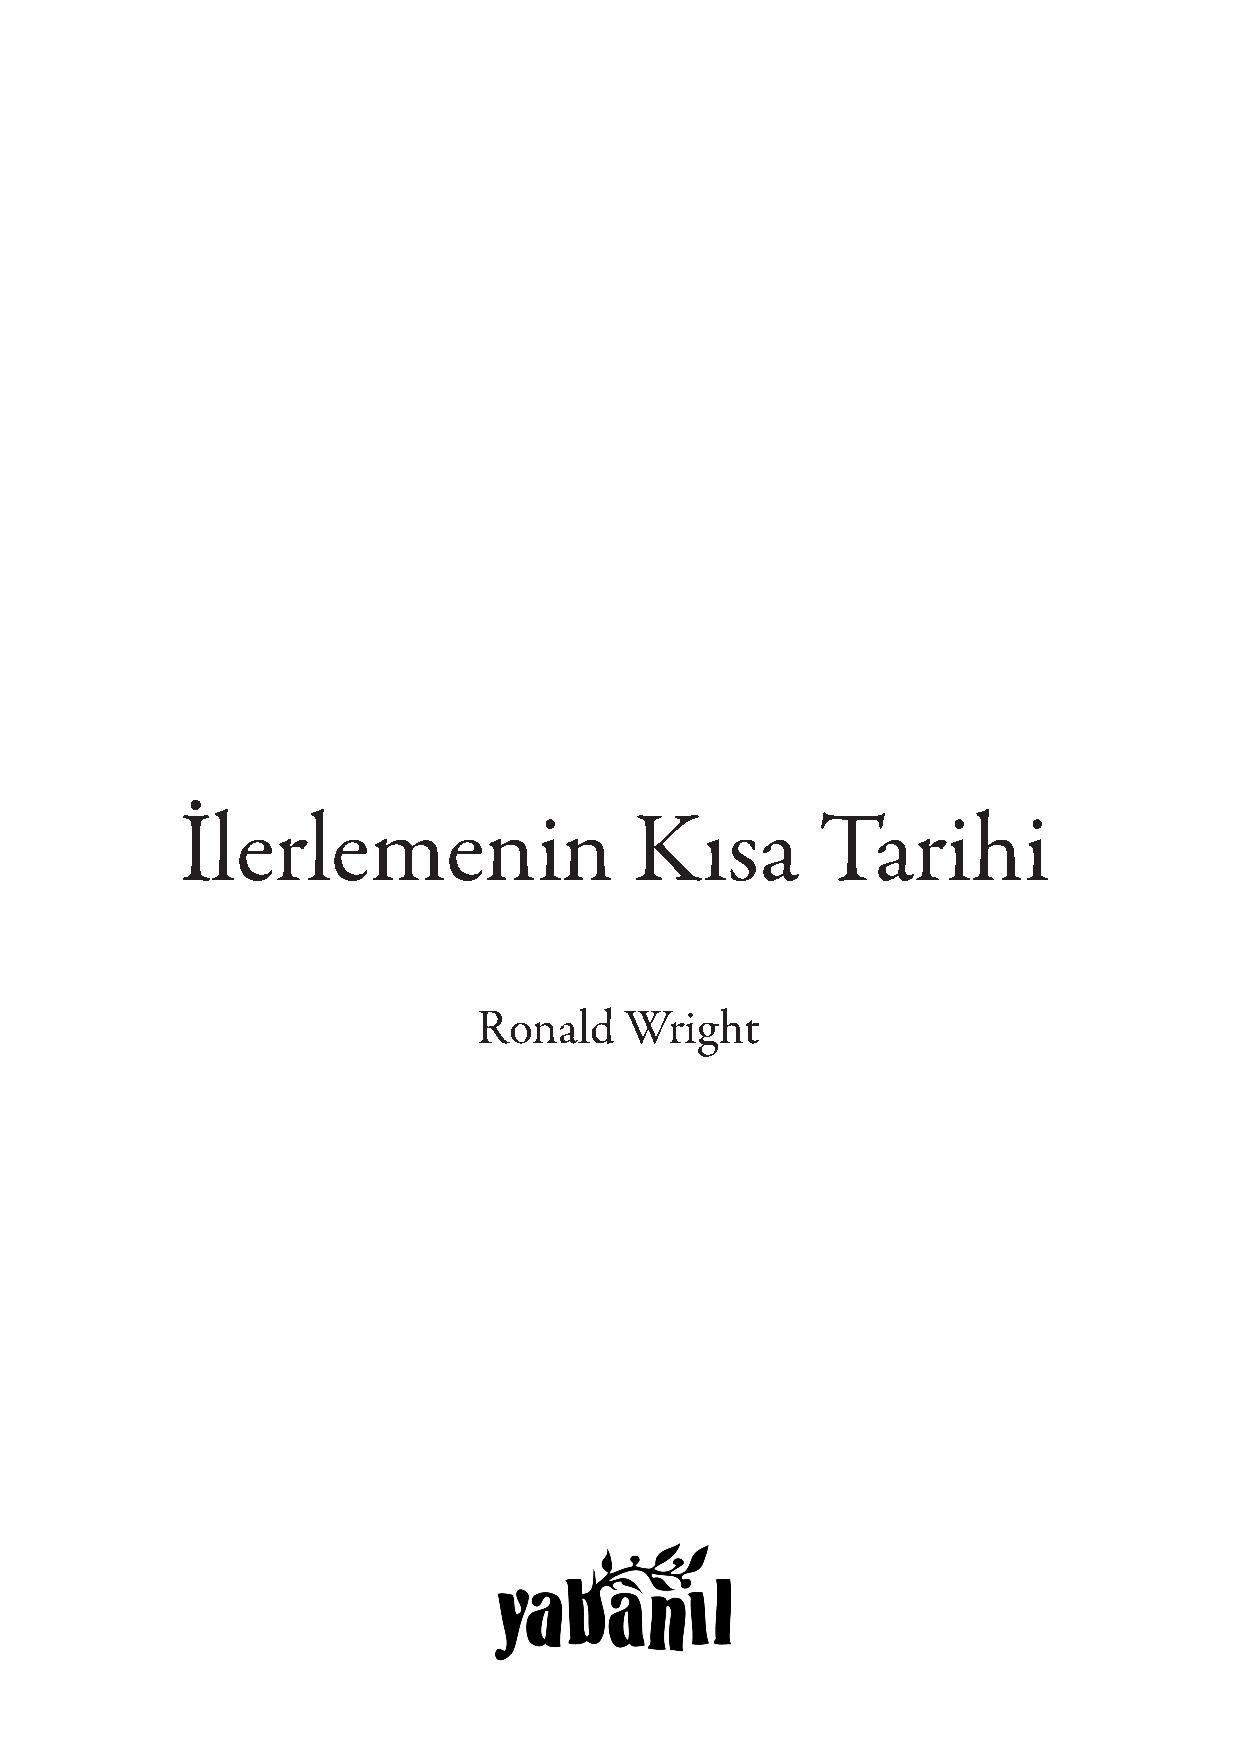 Ronald Wright